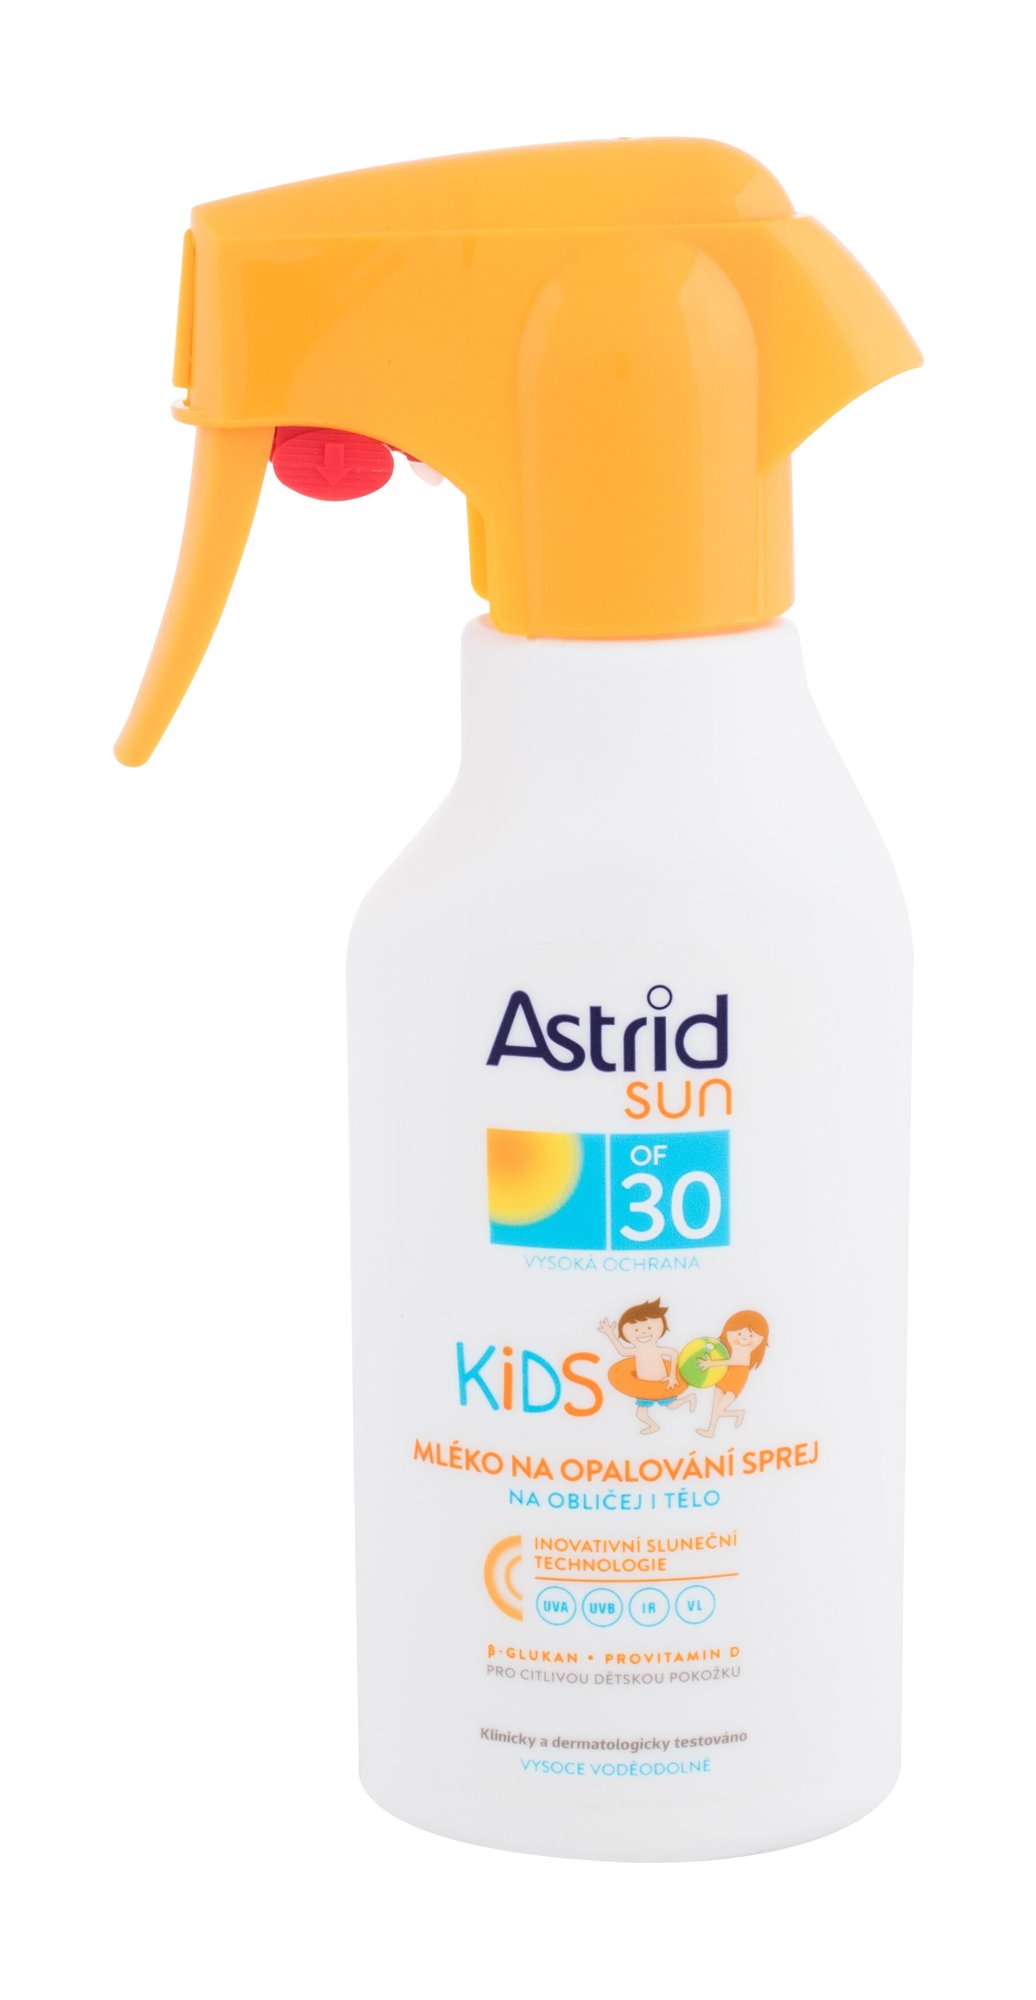 Astrid Sun Kids Face and Body Spray įdegio losjonas